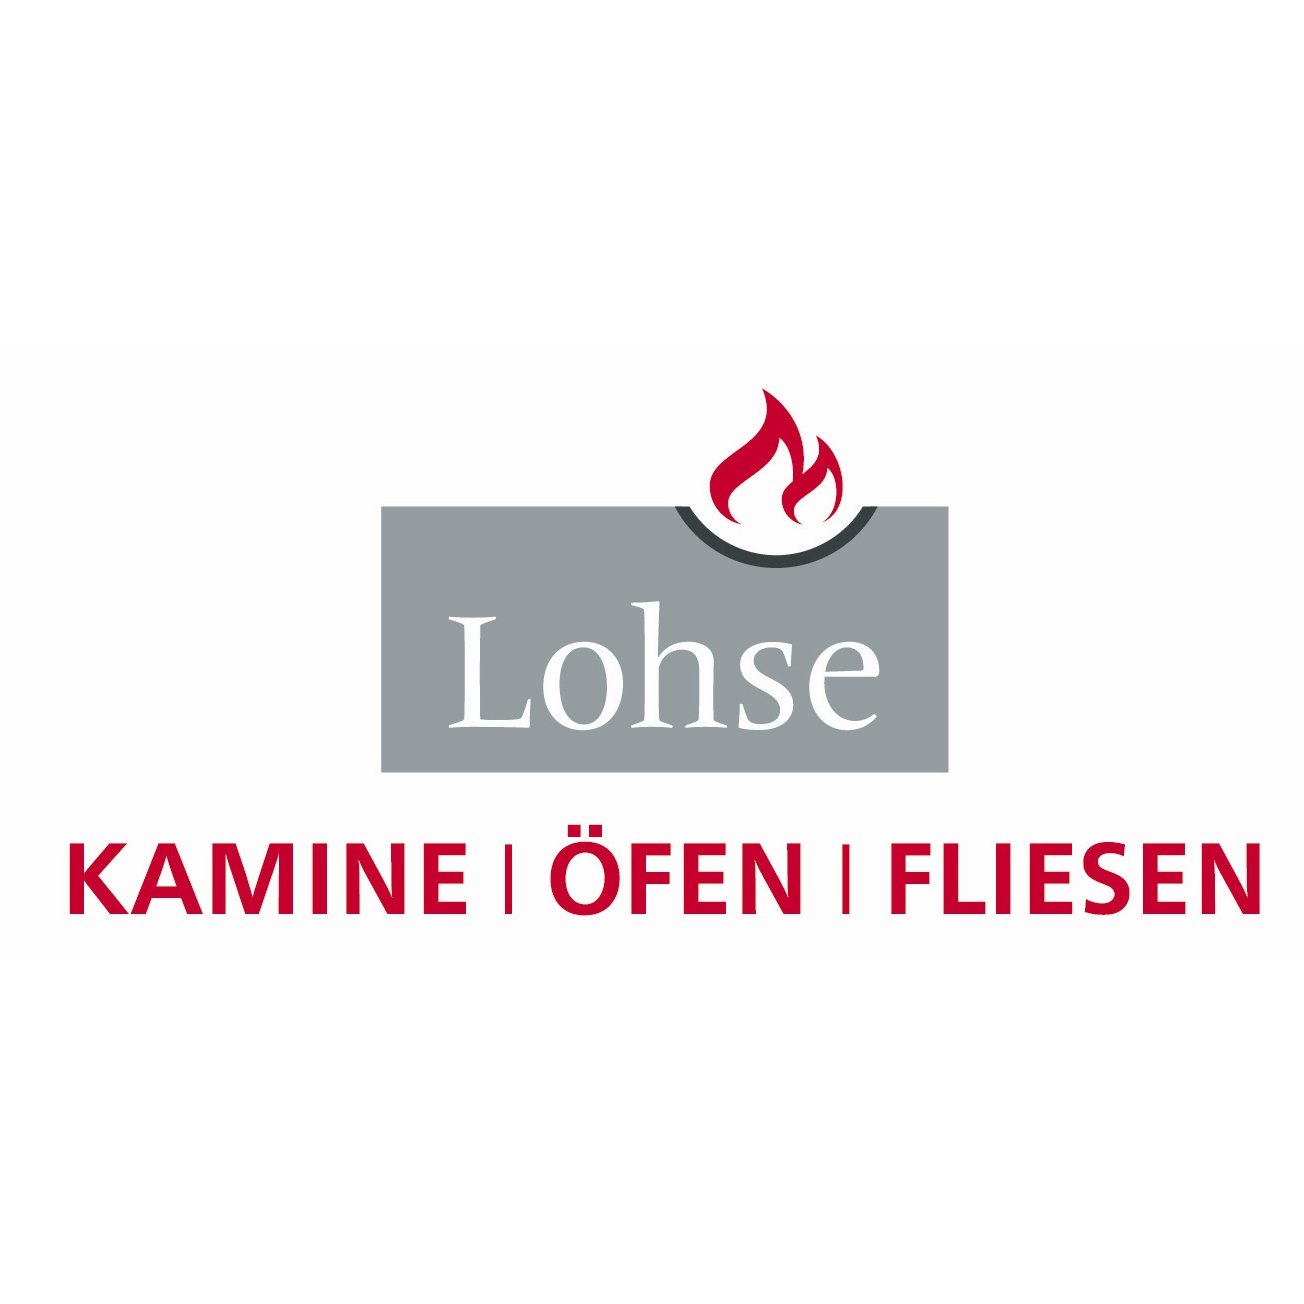 Lohse Kamine-Öfen-Fliesen Inh. Andreas Wache Logo